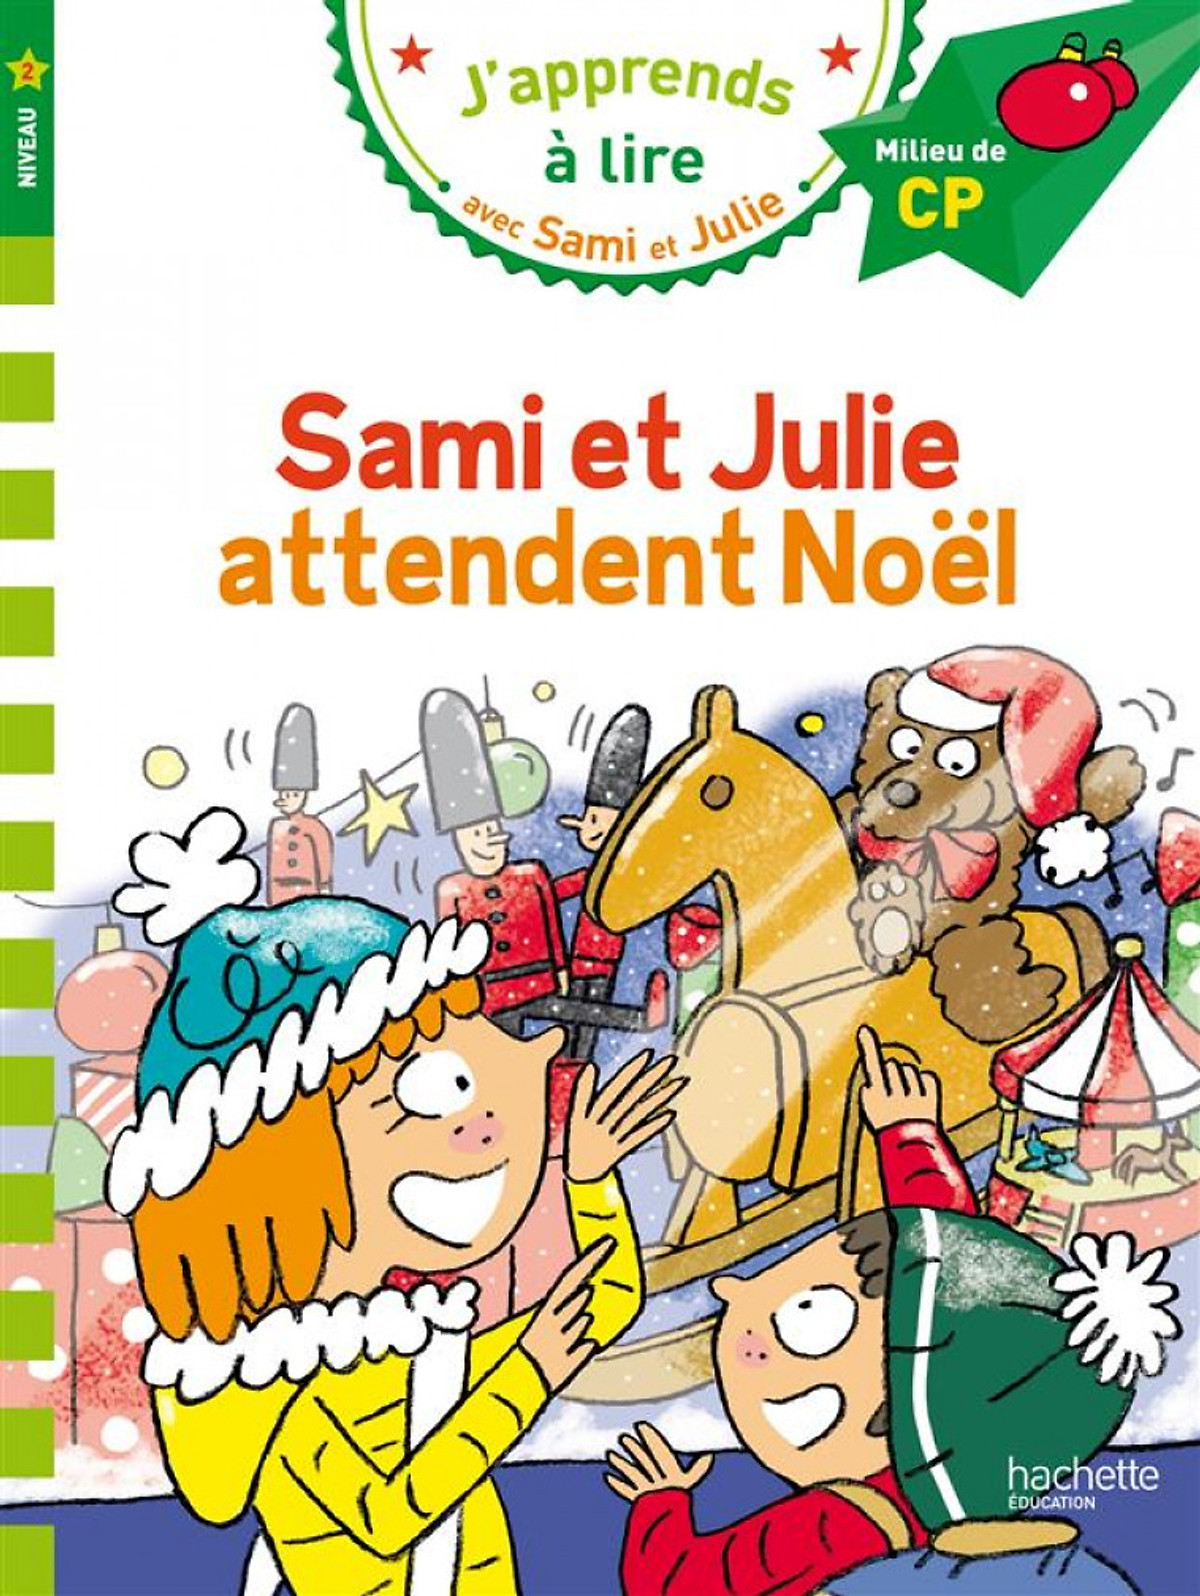 Sách luyện đọc tiếng Pháp: J'apprends à lire avec Sami et Julie -  Sami et Julie attendent Noel